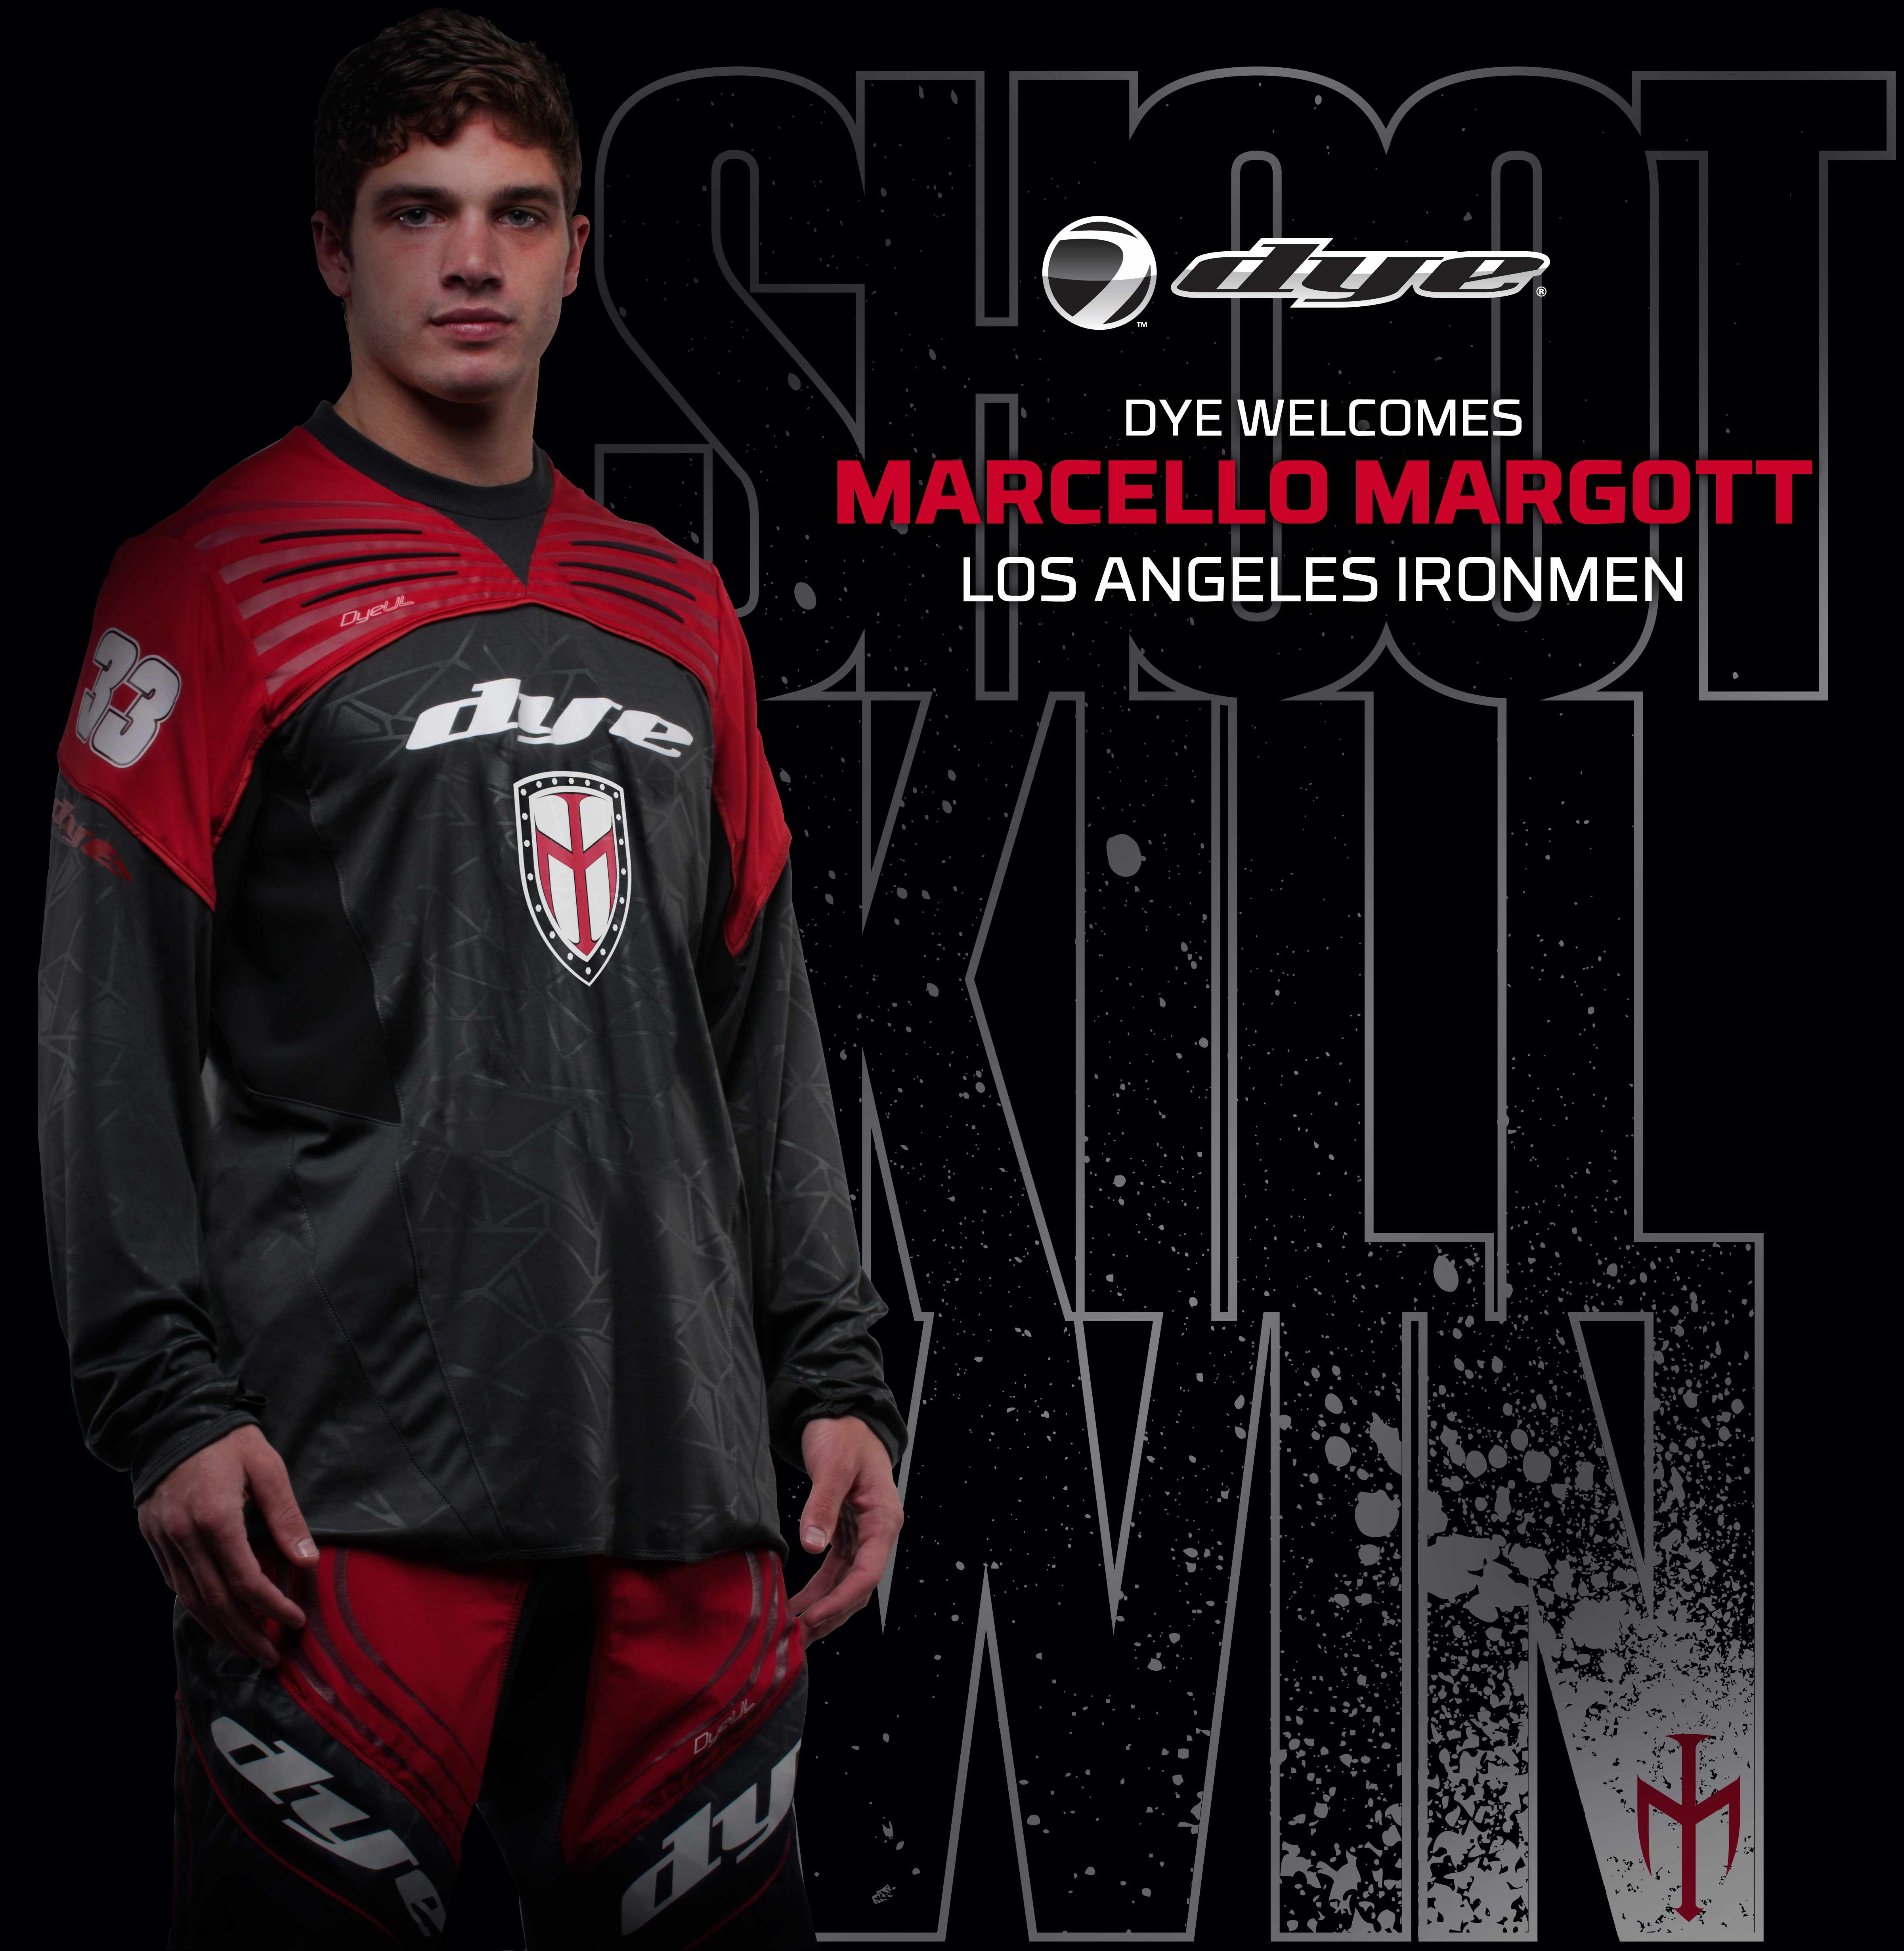 Marcello Margott signs with LA Ironmen